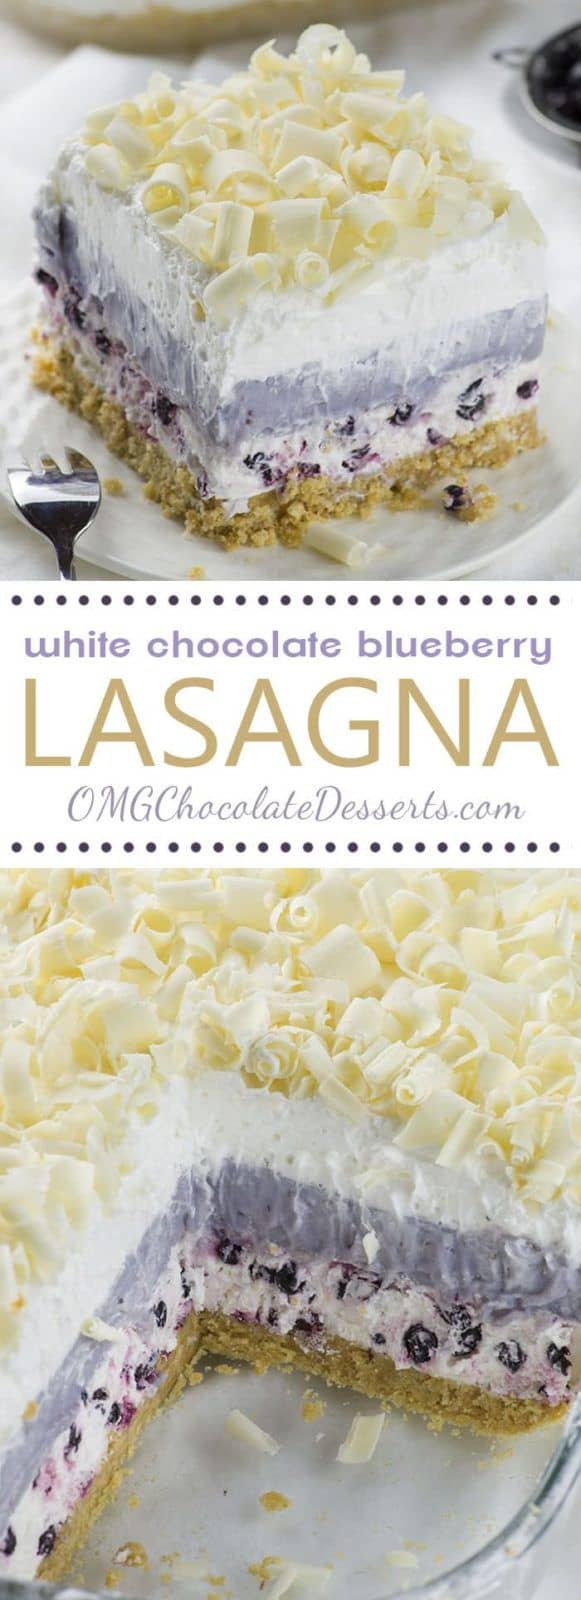 White chocolate blueberry lasagna